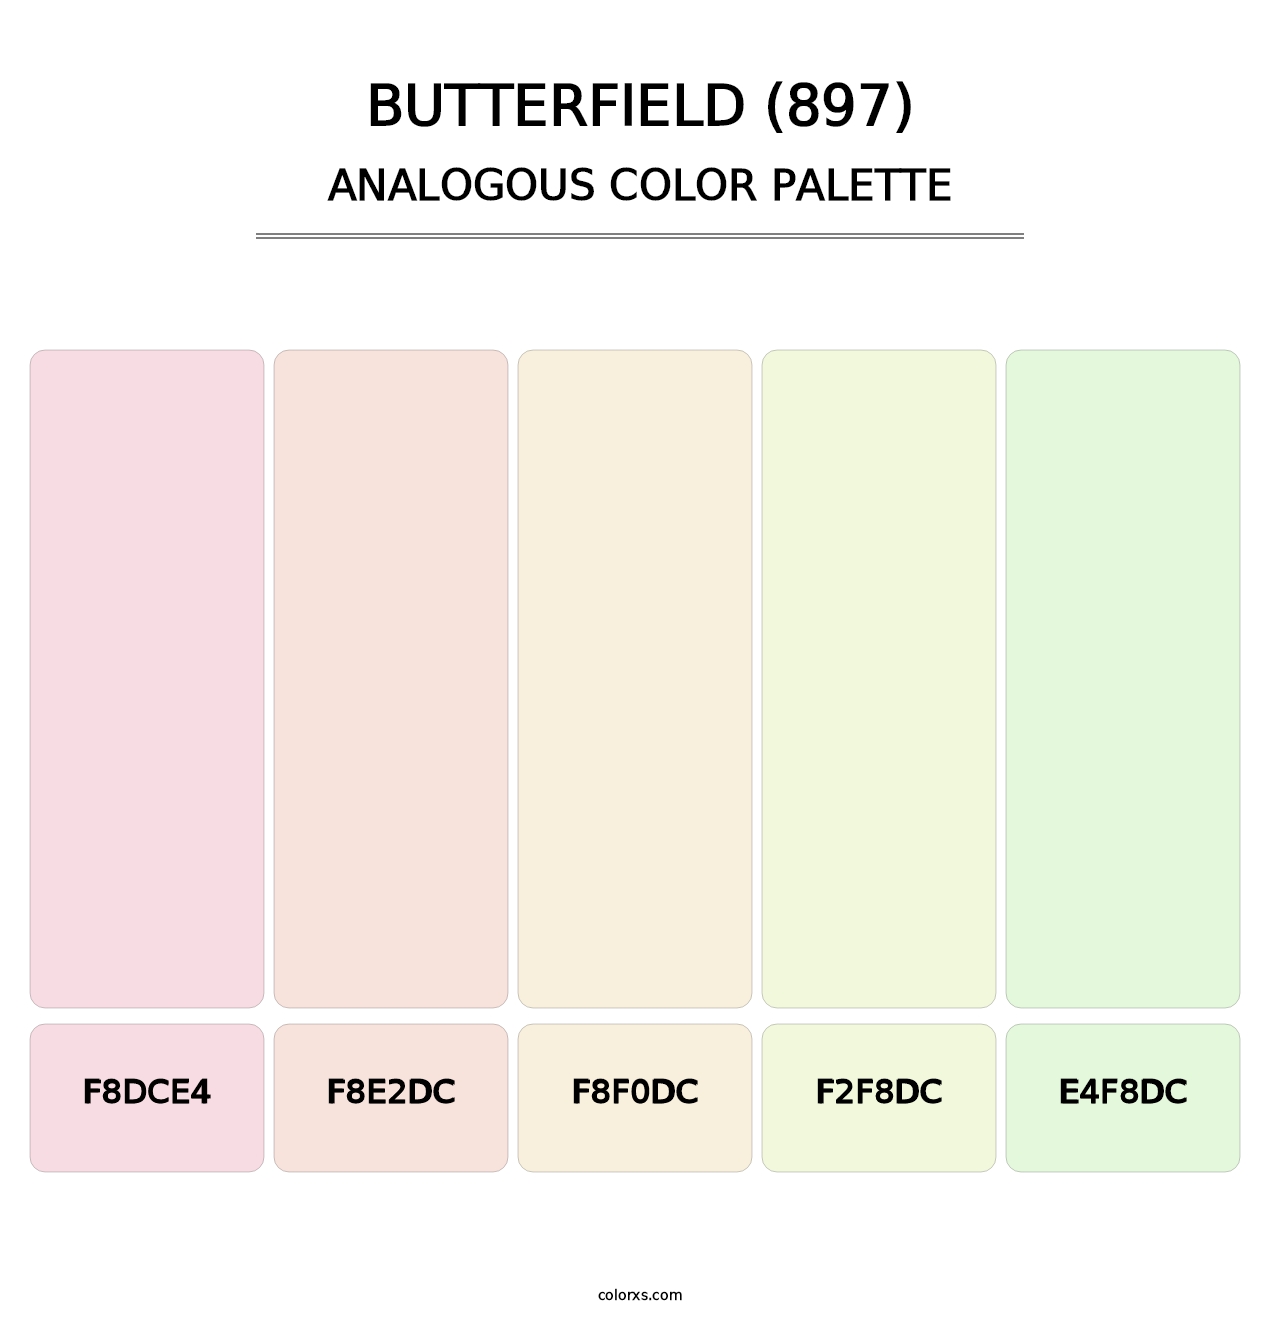 Butterfield (897) - Analogous Color Palette